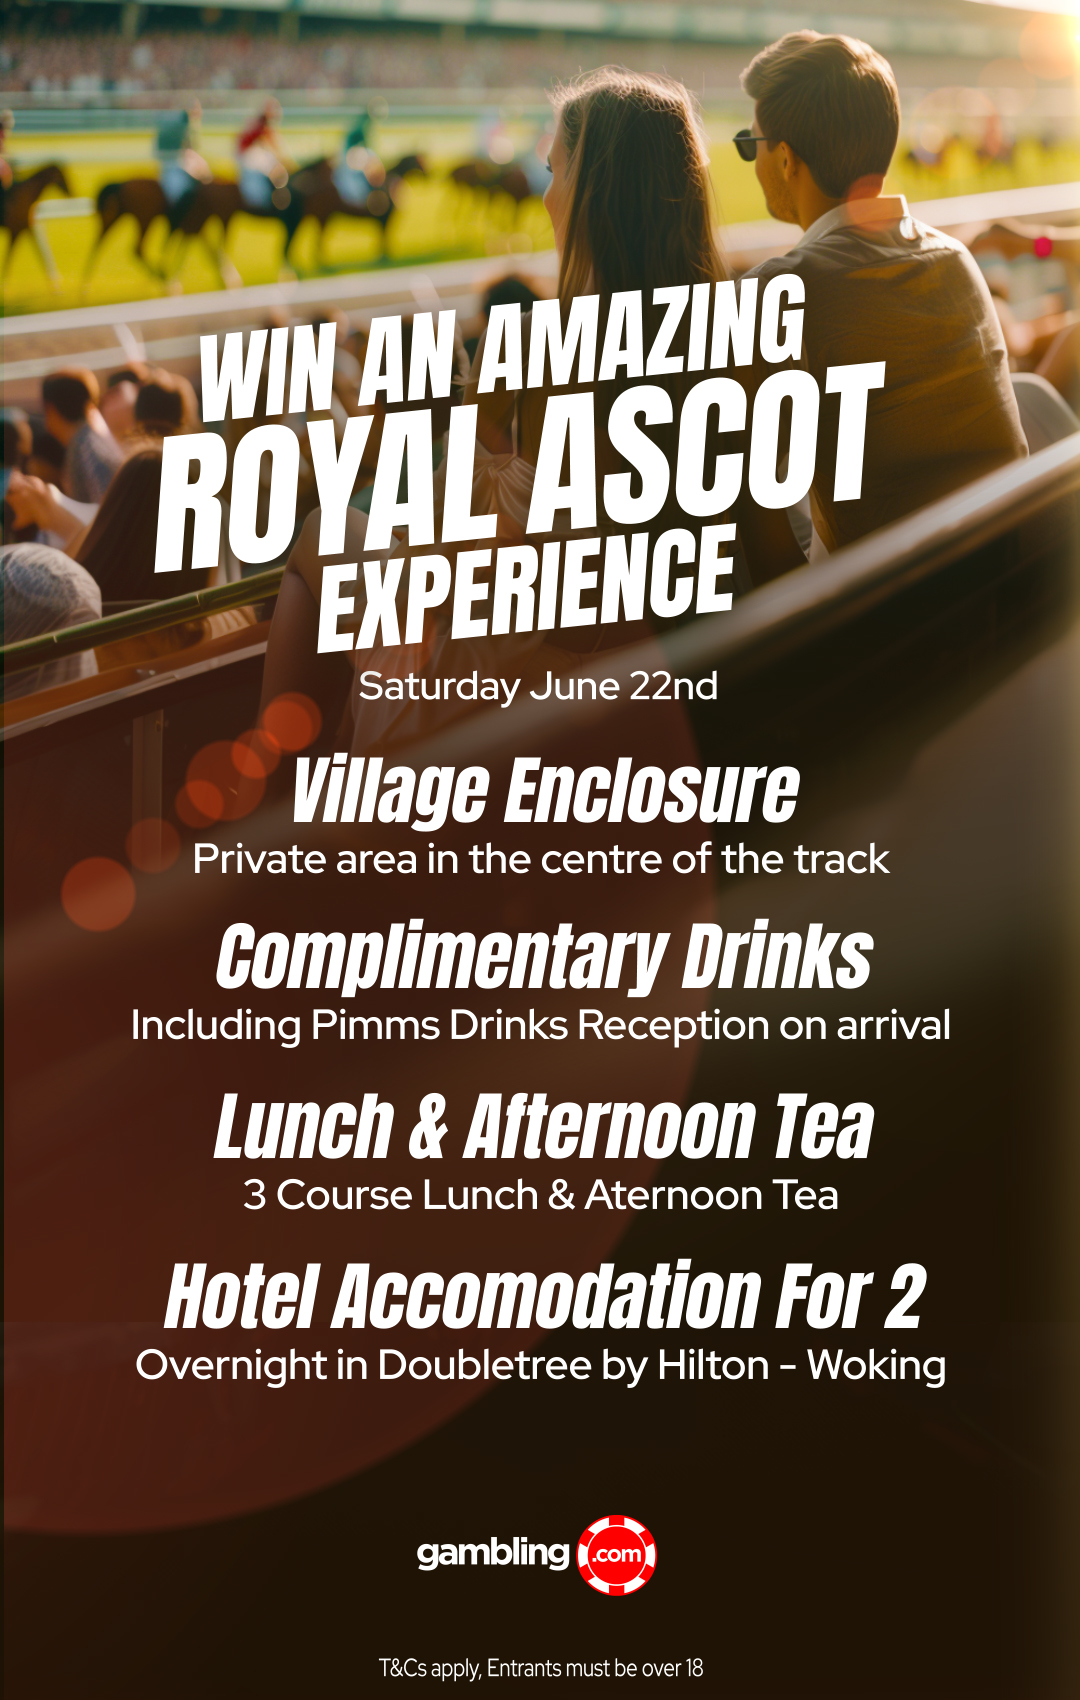 Win a trip to Royal Ascot with Gambling.com